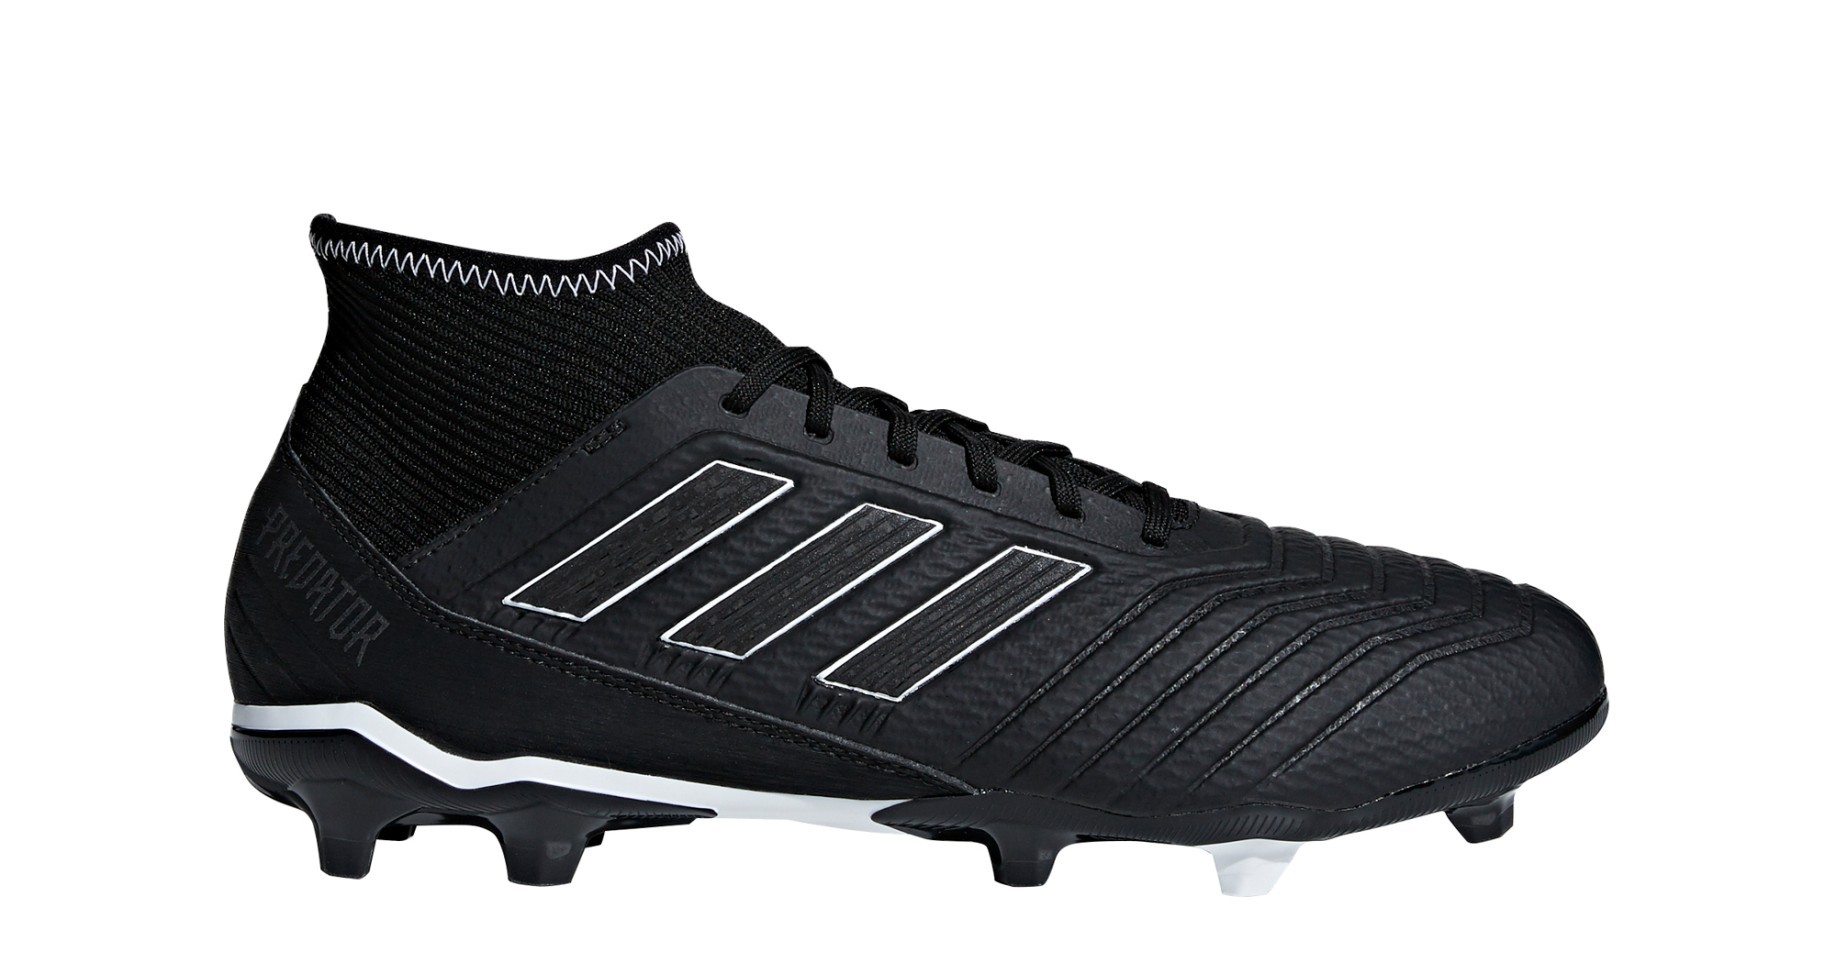 adidas predator 18.3 fg football boots